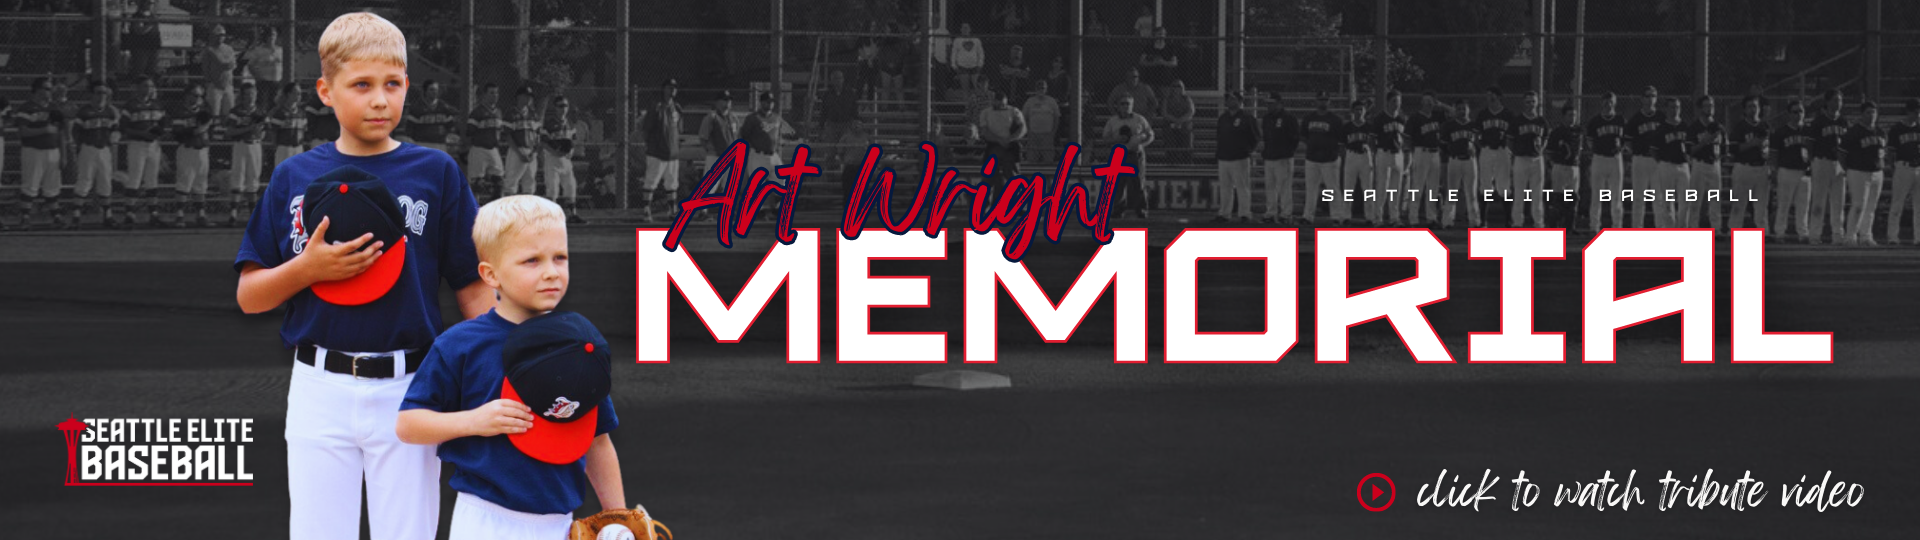 Art Wright Memorial Day Tournament Seattle Elite Baseball